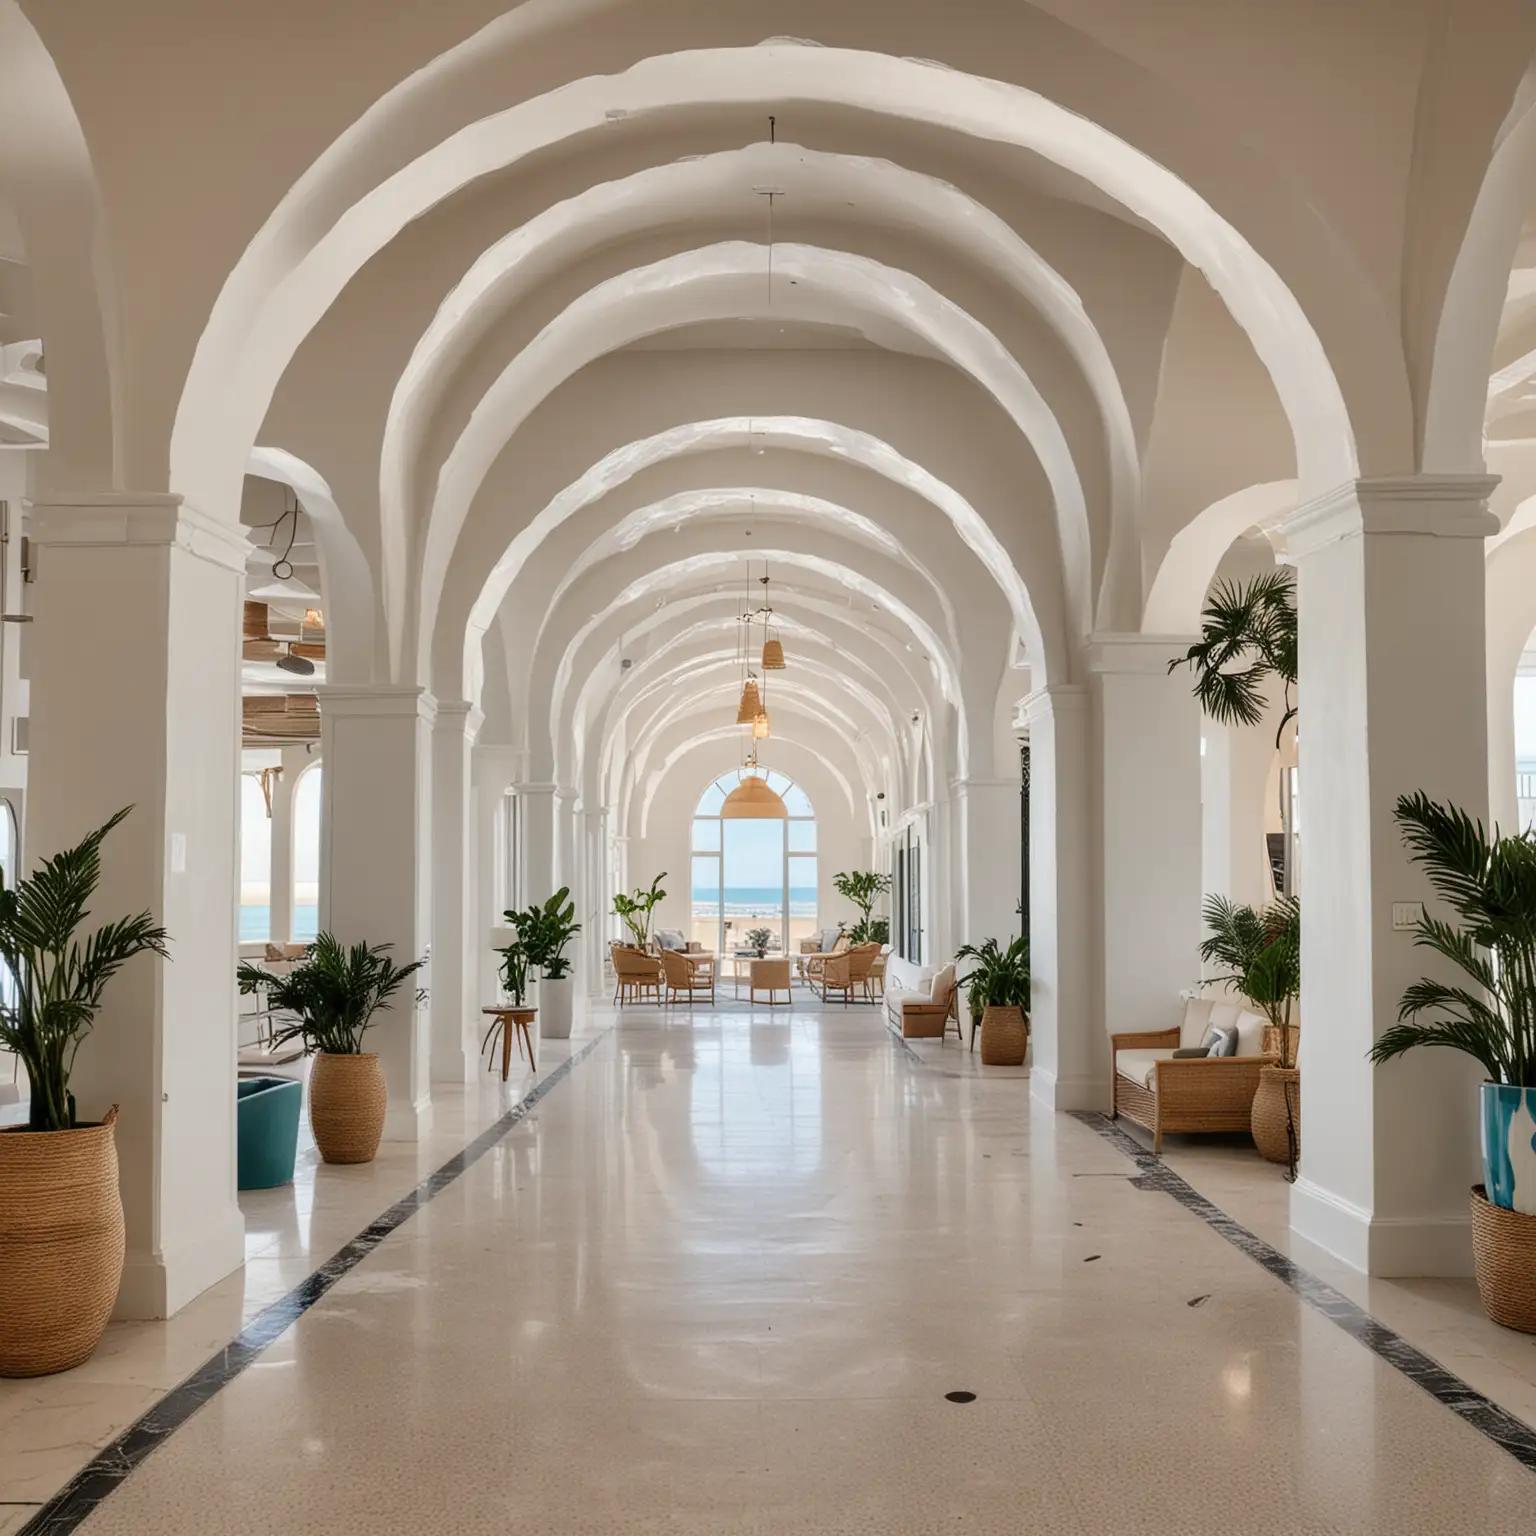 Contemporary Coastal Hotel Lobby with Elegant Arches